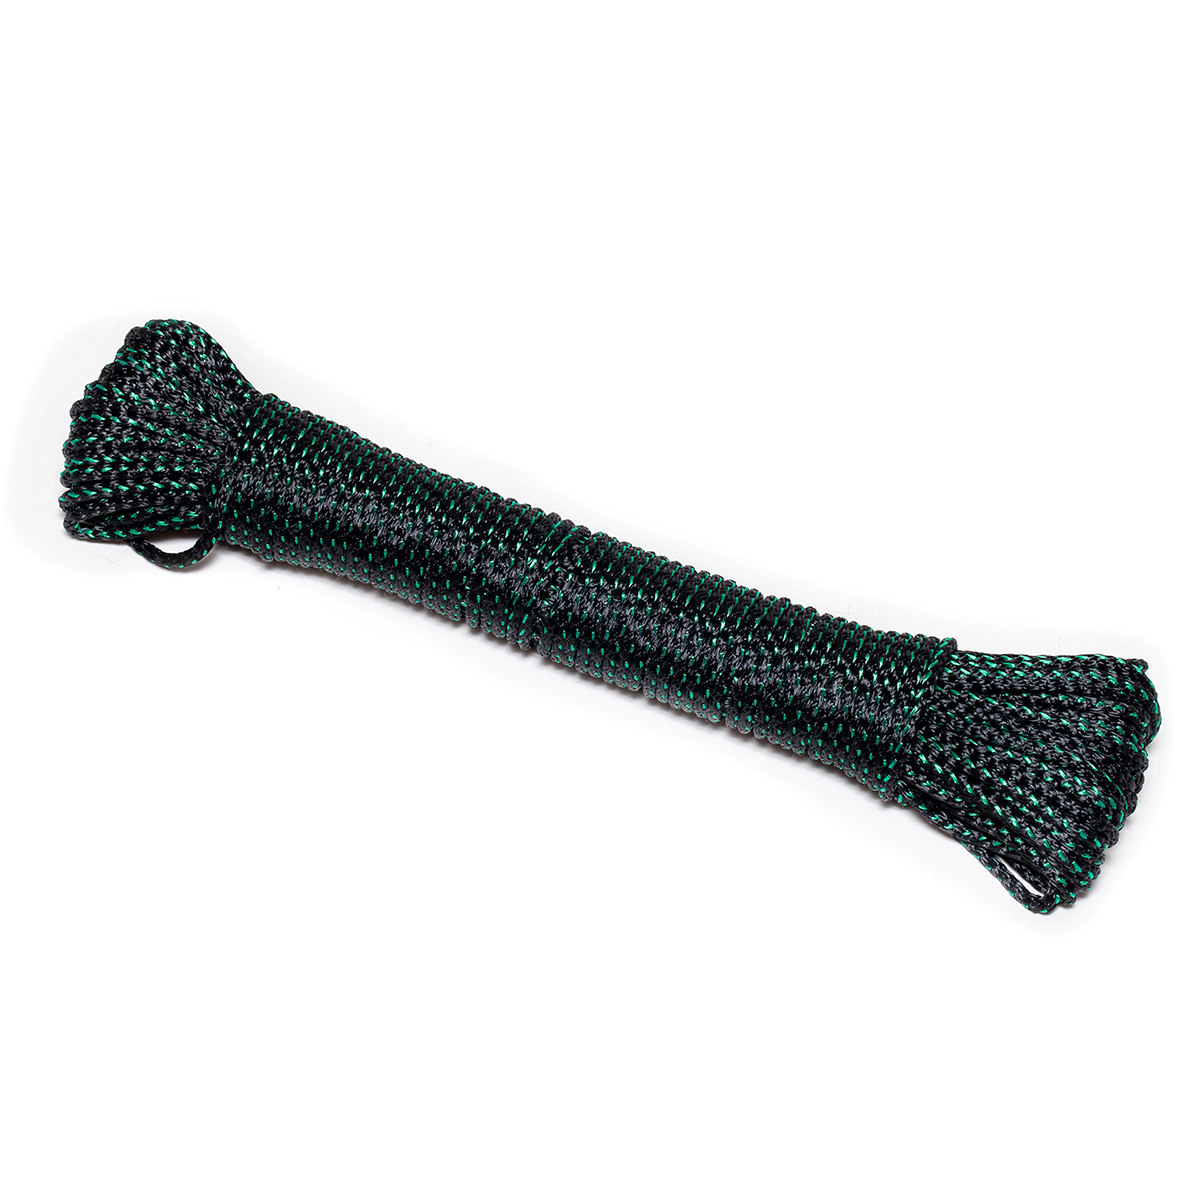 Шнур утяжеляющий Петроканат, 31 м, черно-зеленый, вес 24 г/м шнур для вязания 100% полиэфир ширина 3 мм 100м джинс